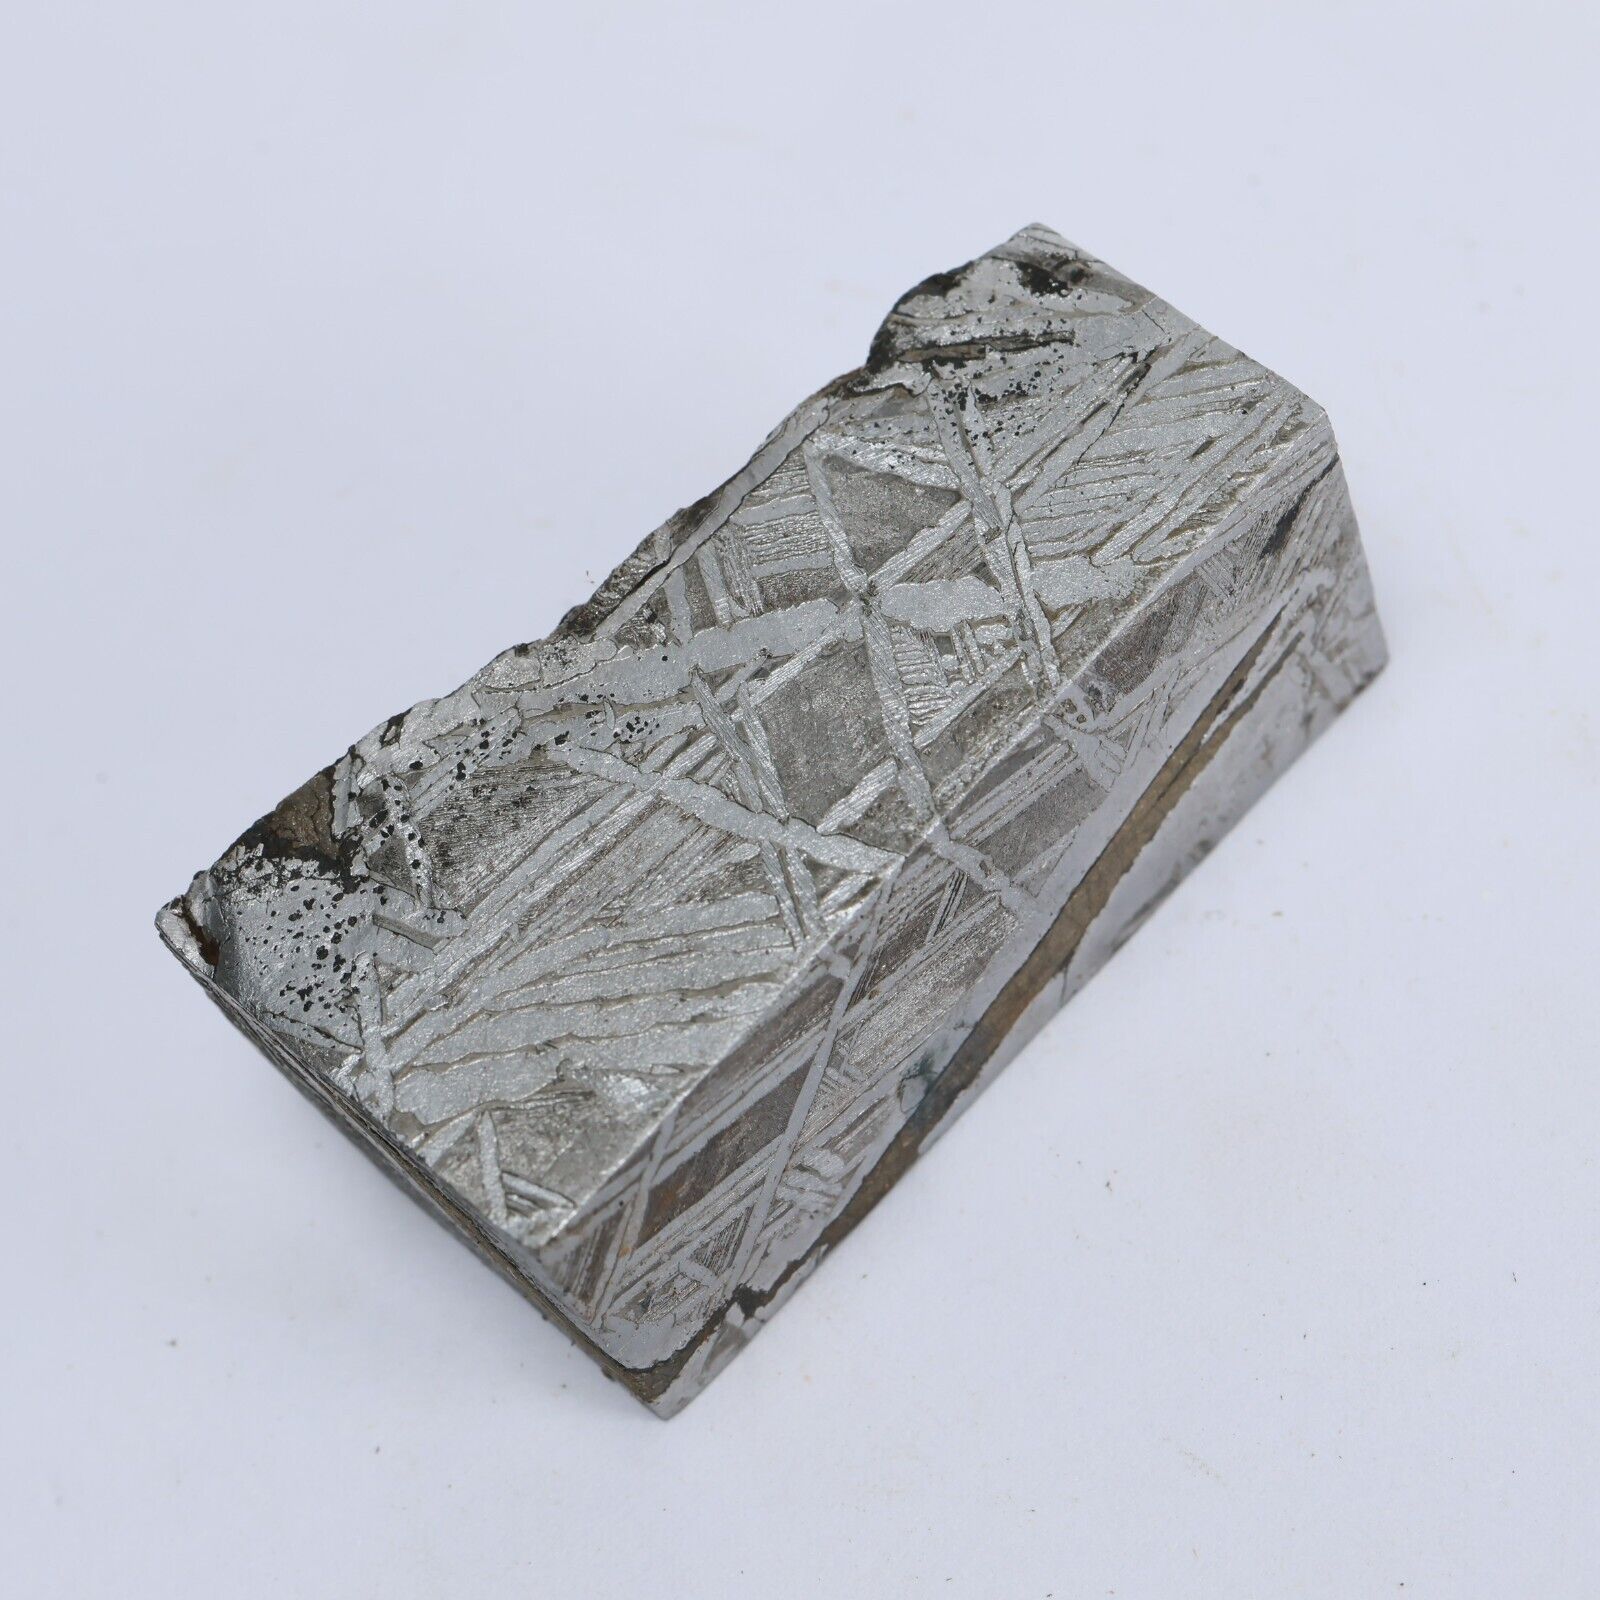 167g Muonionalusta meteorite slice R1714